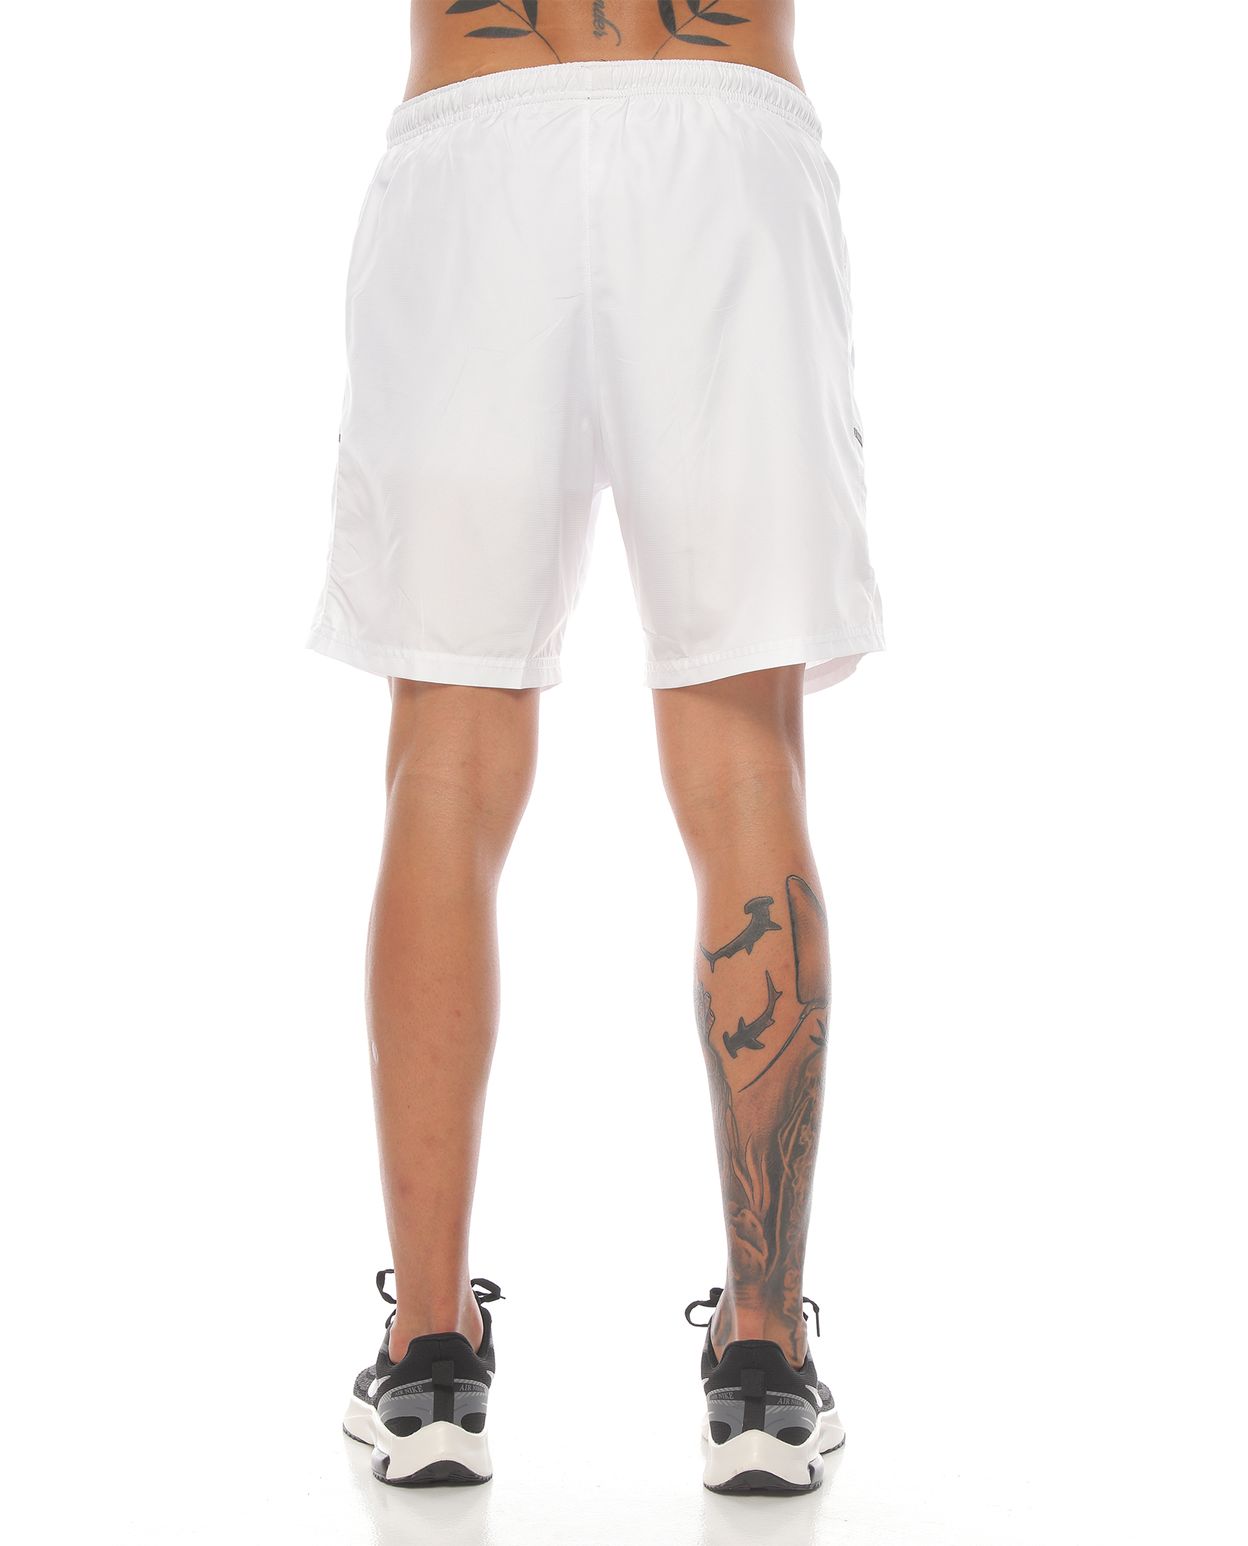 pantaloneta deportiva blanca para hombre parte trasera